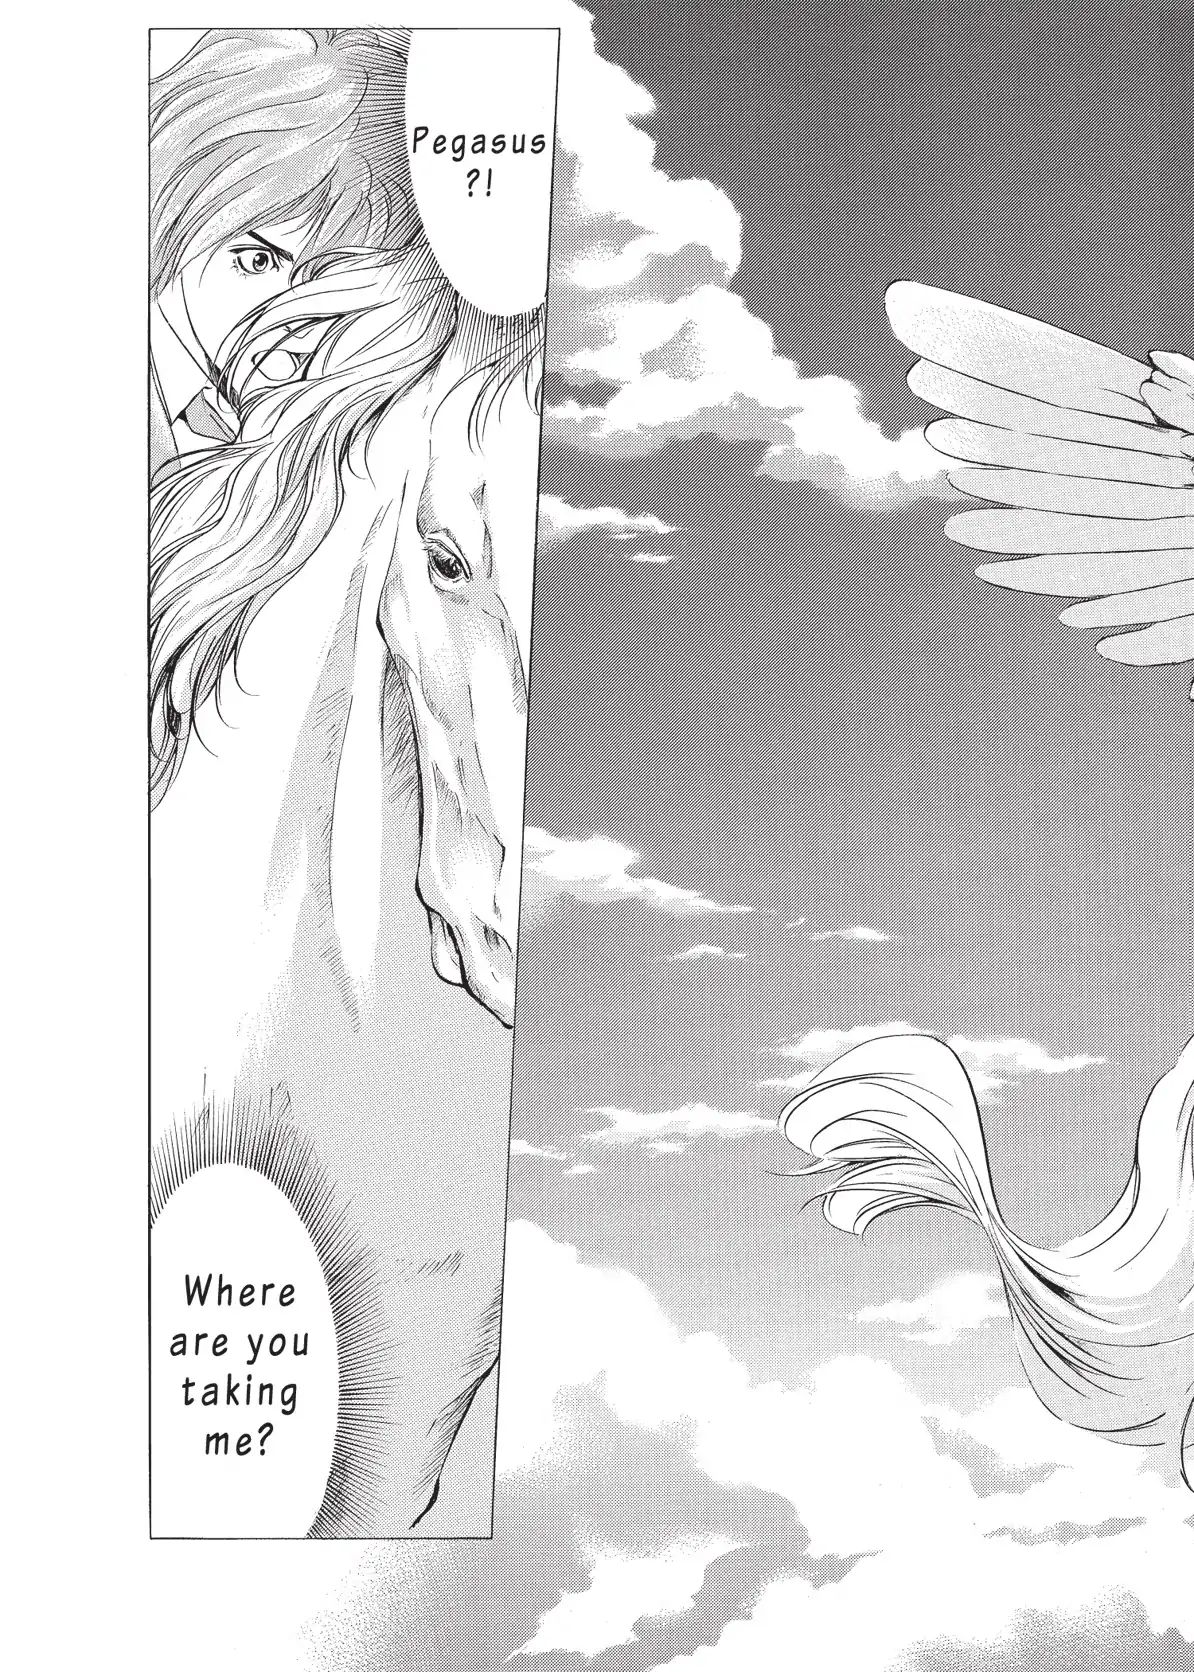 Kami No Shizuku Vol.4 Chapter 63: A Pegasus Soaring Through Time - Picture 2